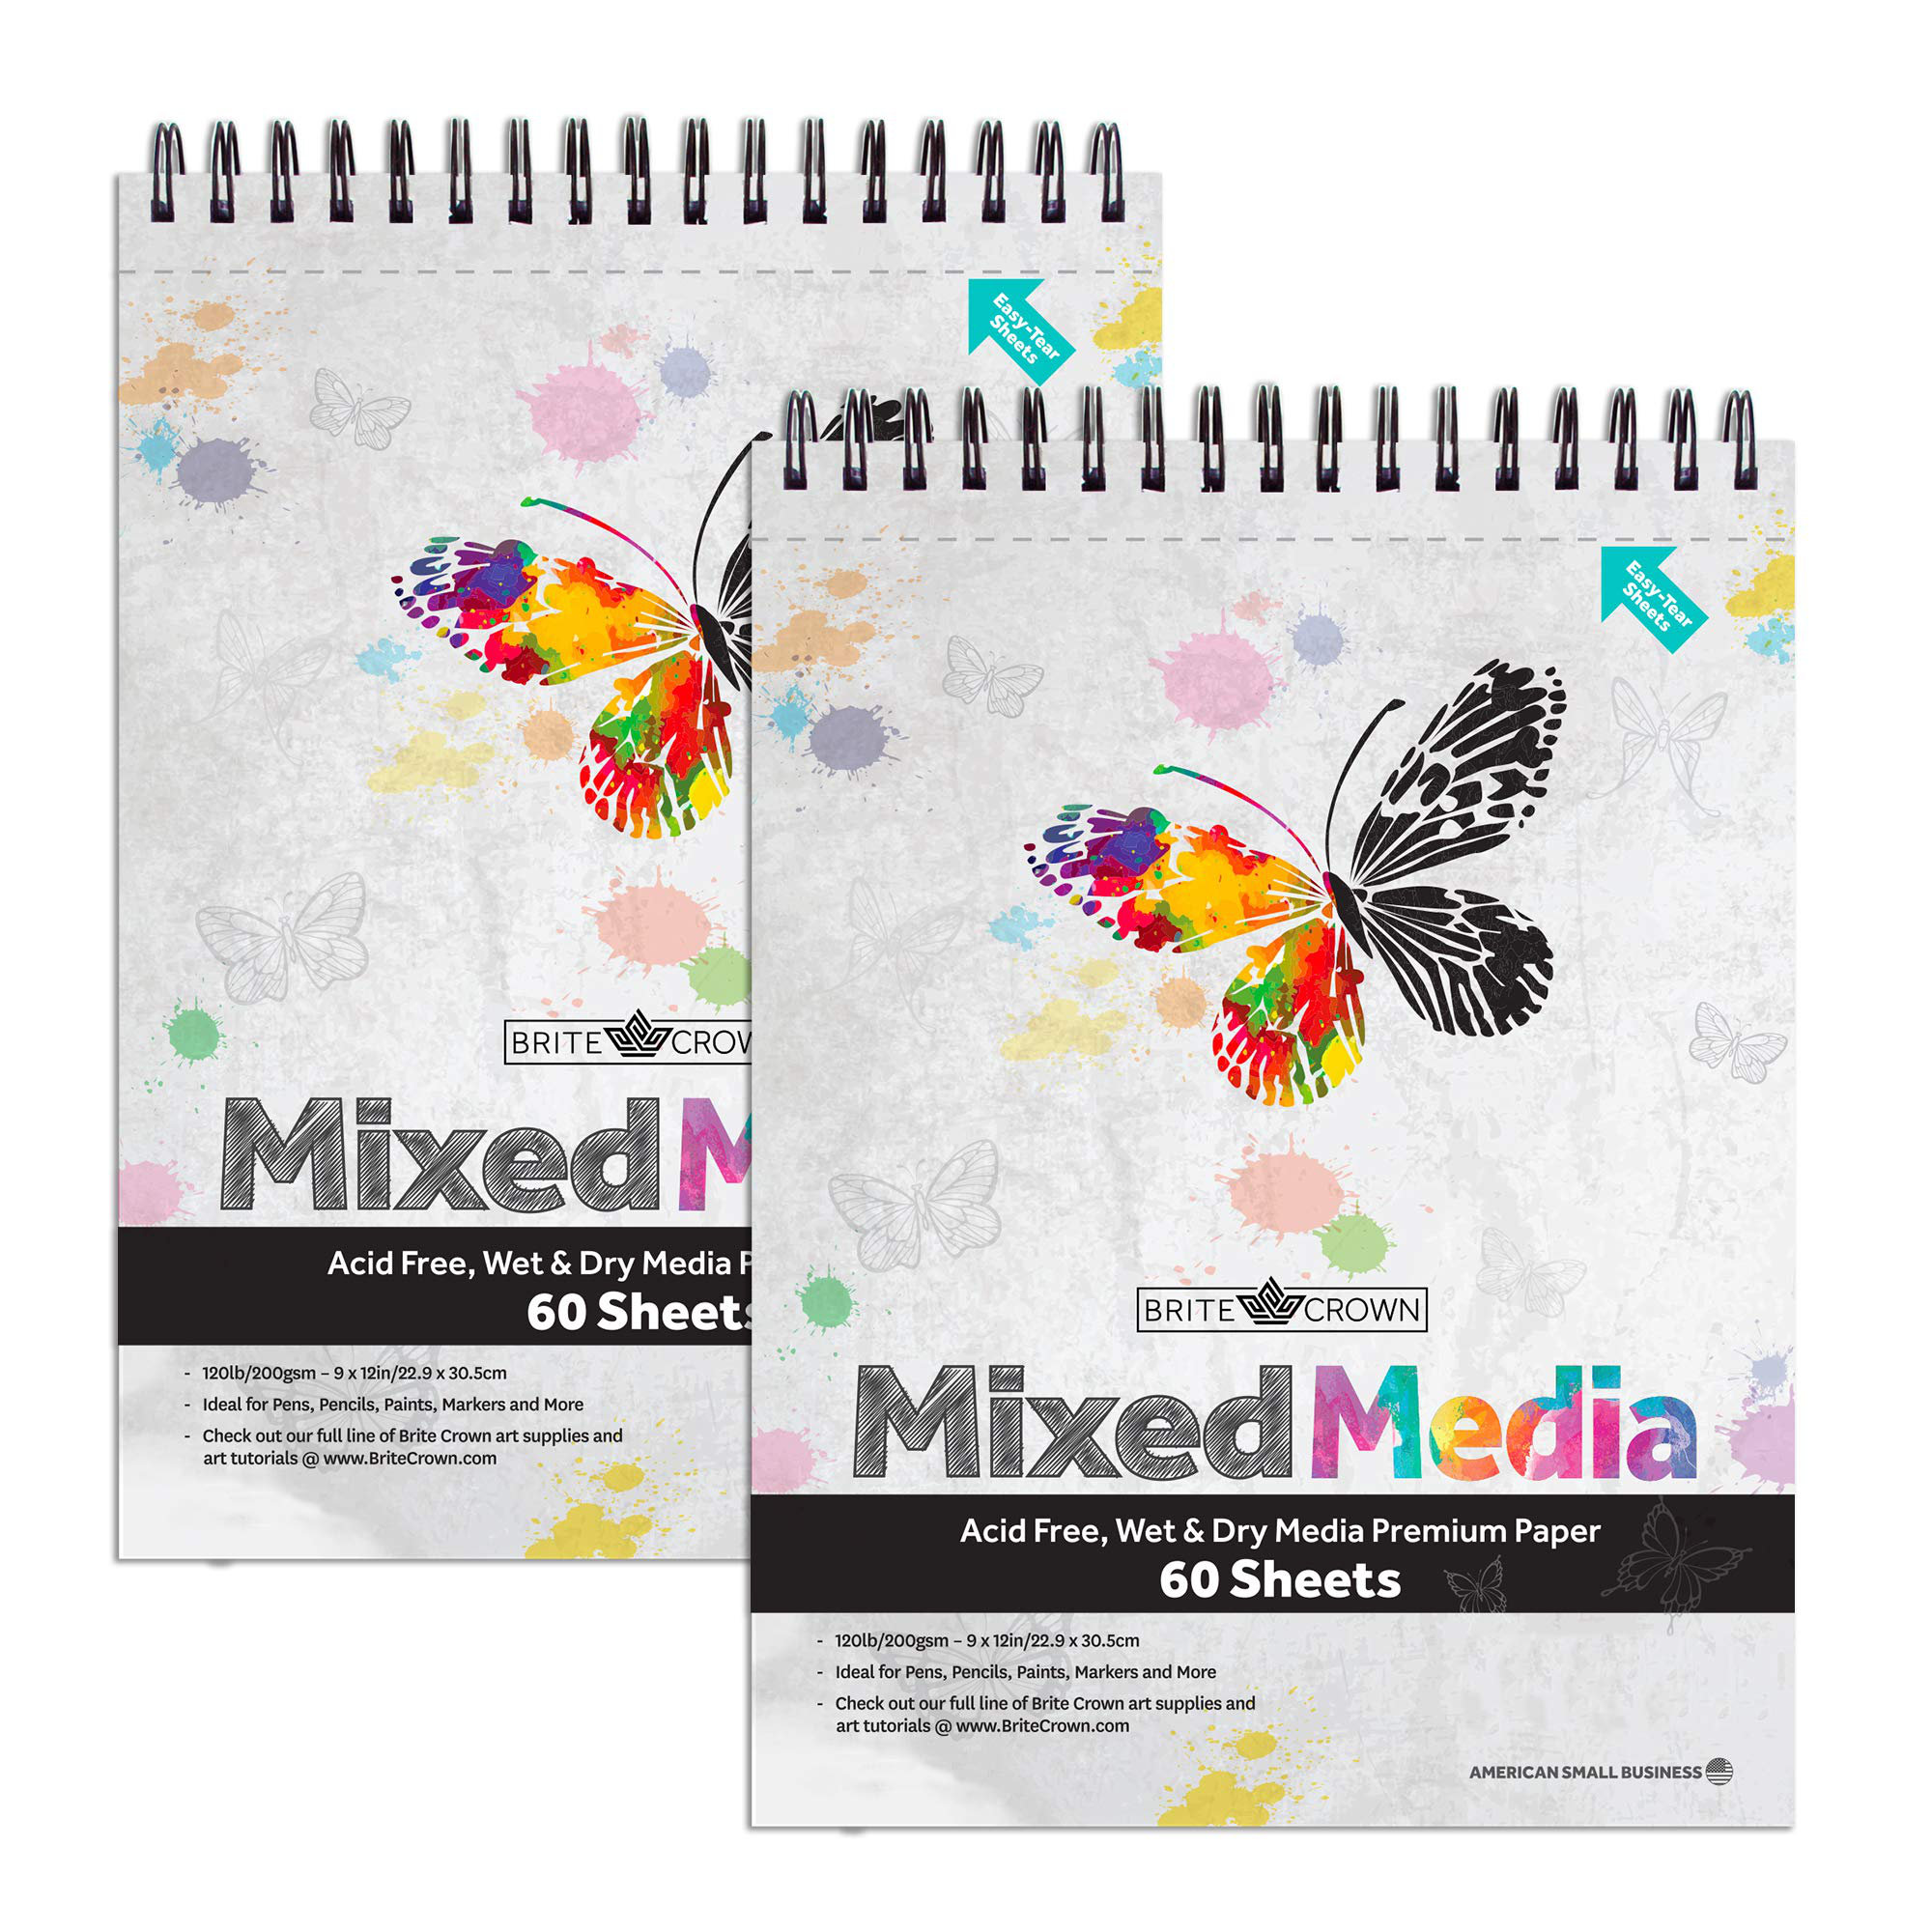 U.S. Art Supply 9 x 12 Mixed Media Paper Pad Sketchbook, 2 Pack